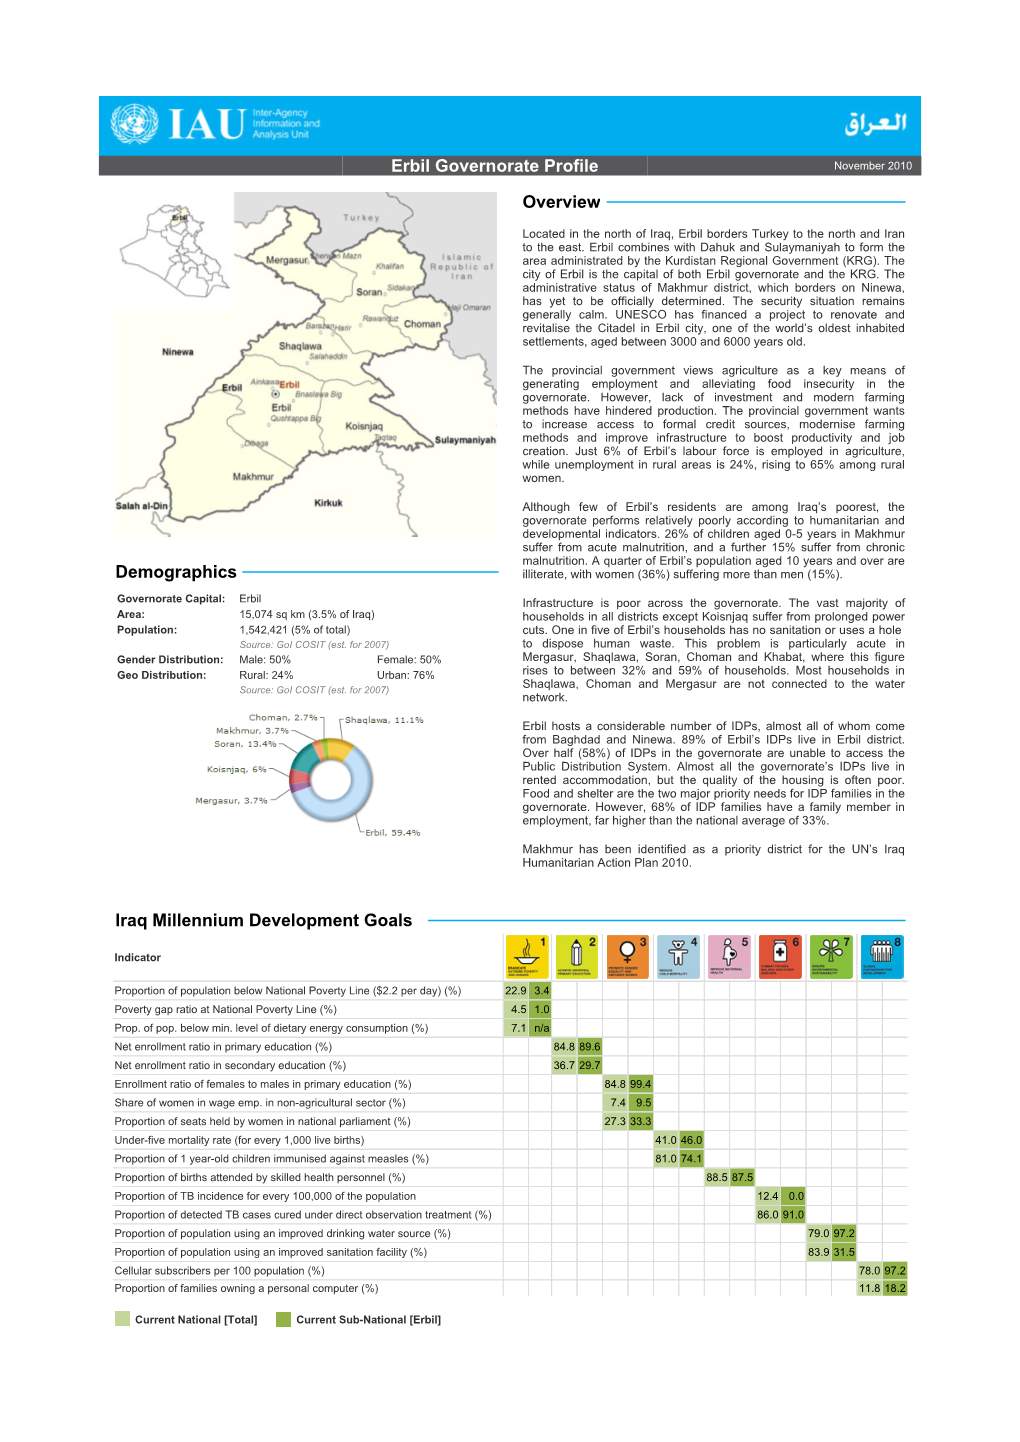 Erbil Governorate Profile Overview Demographics Iraq Millennium